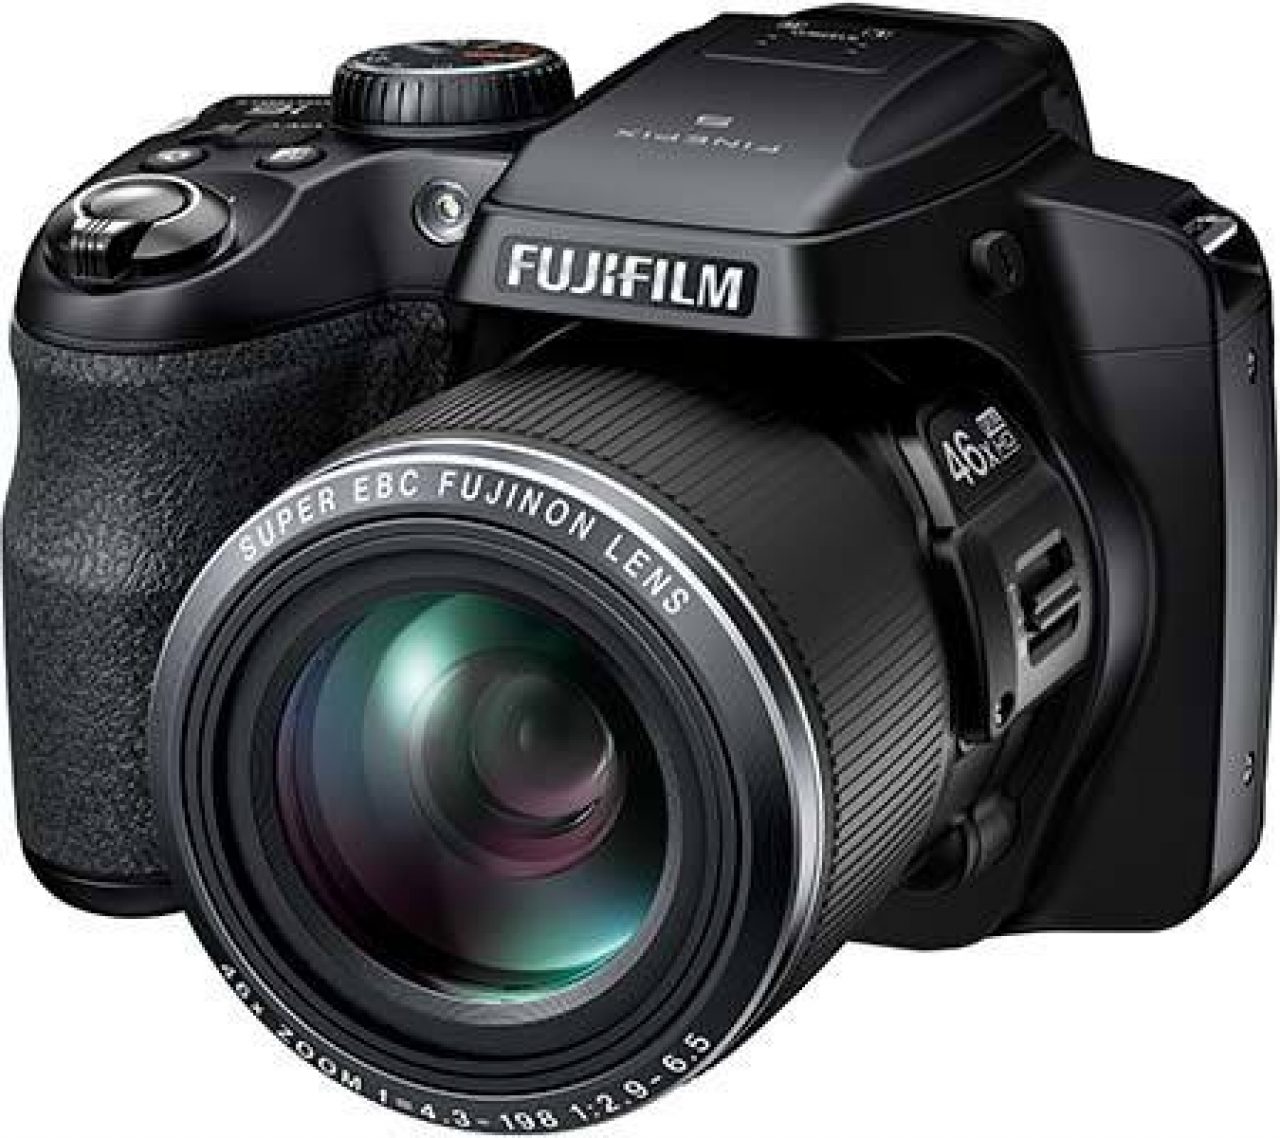 Fujifilm FinePix S8500 Review | Photography Blog